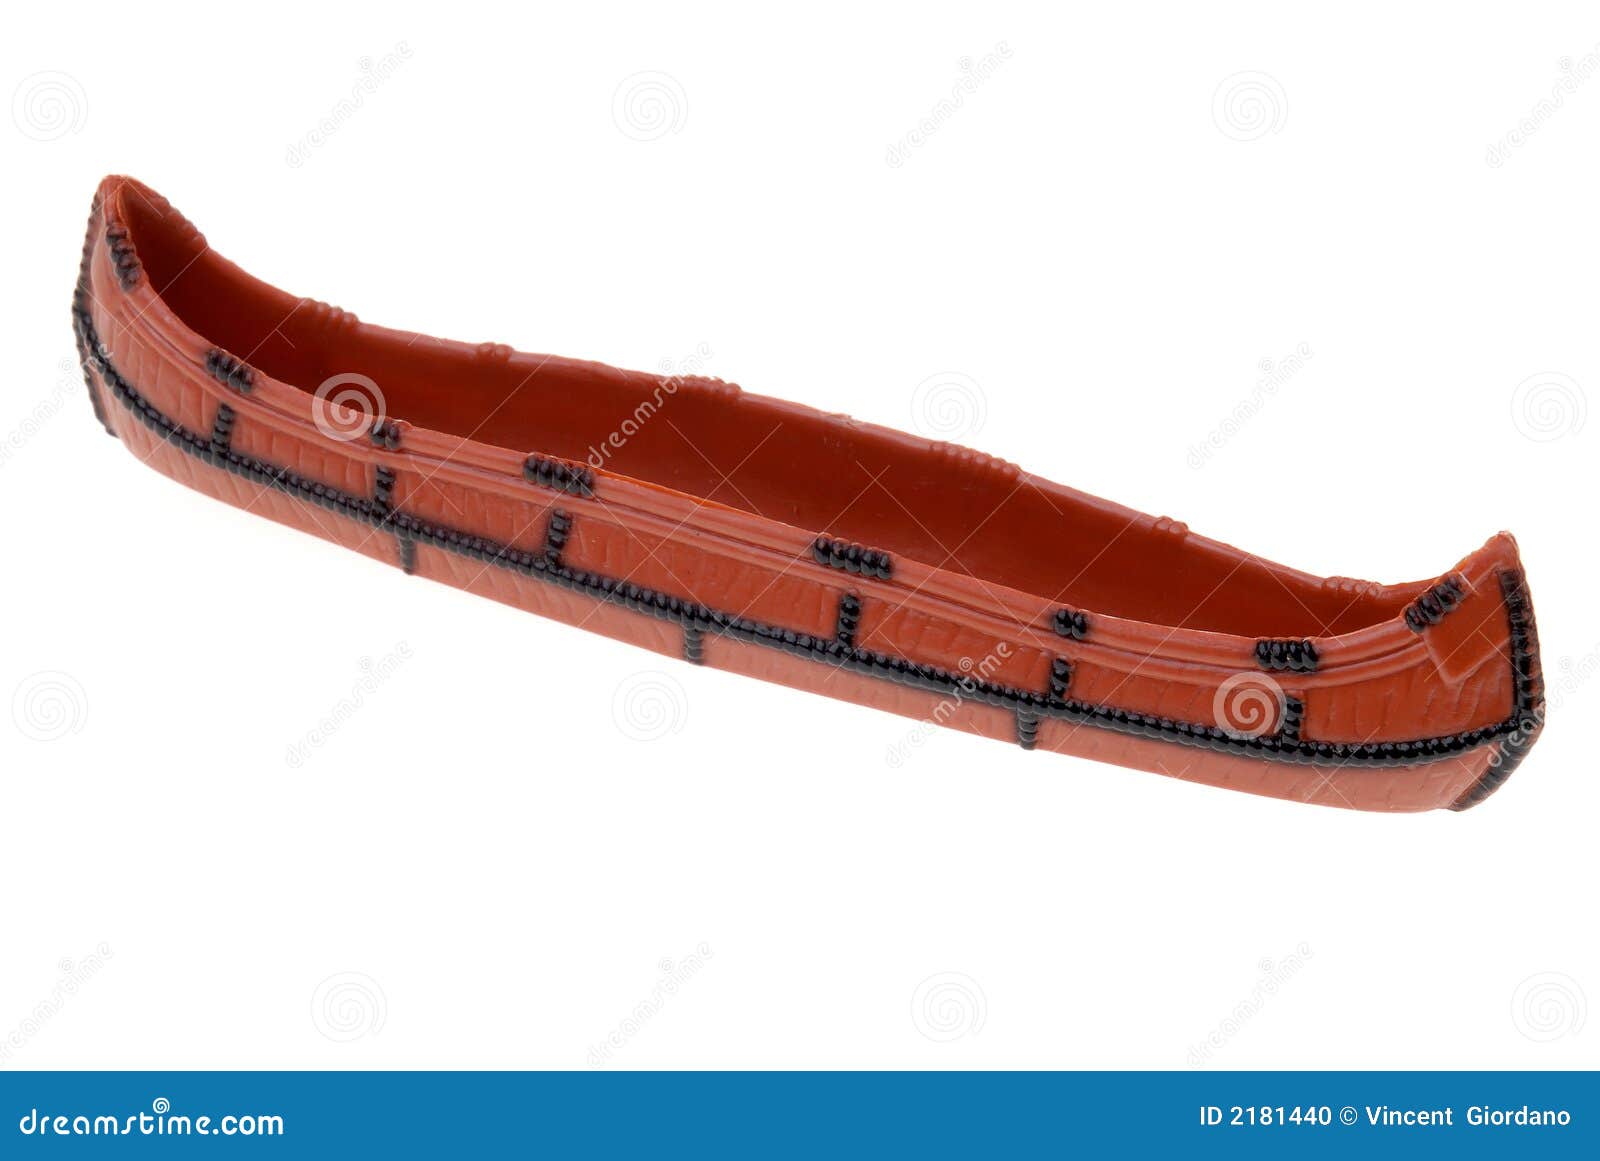 Native American Canoe Toy Stock Photo - Image: 2181440